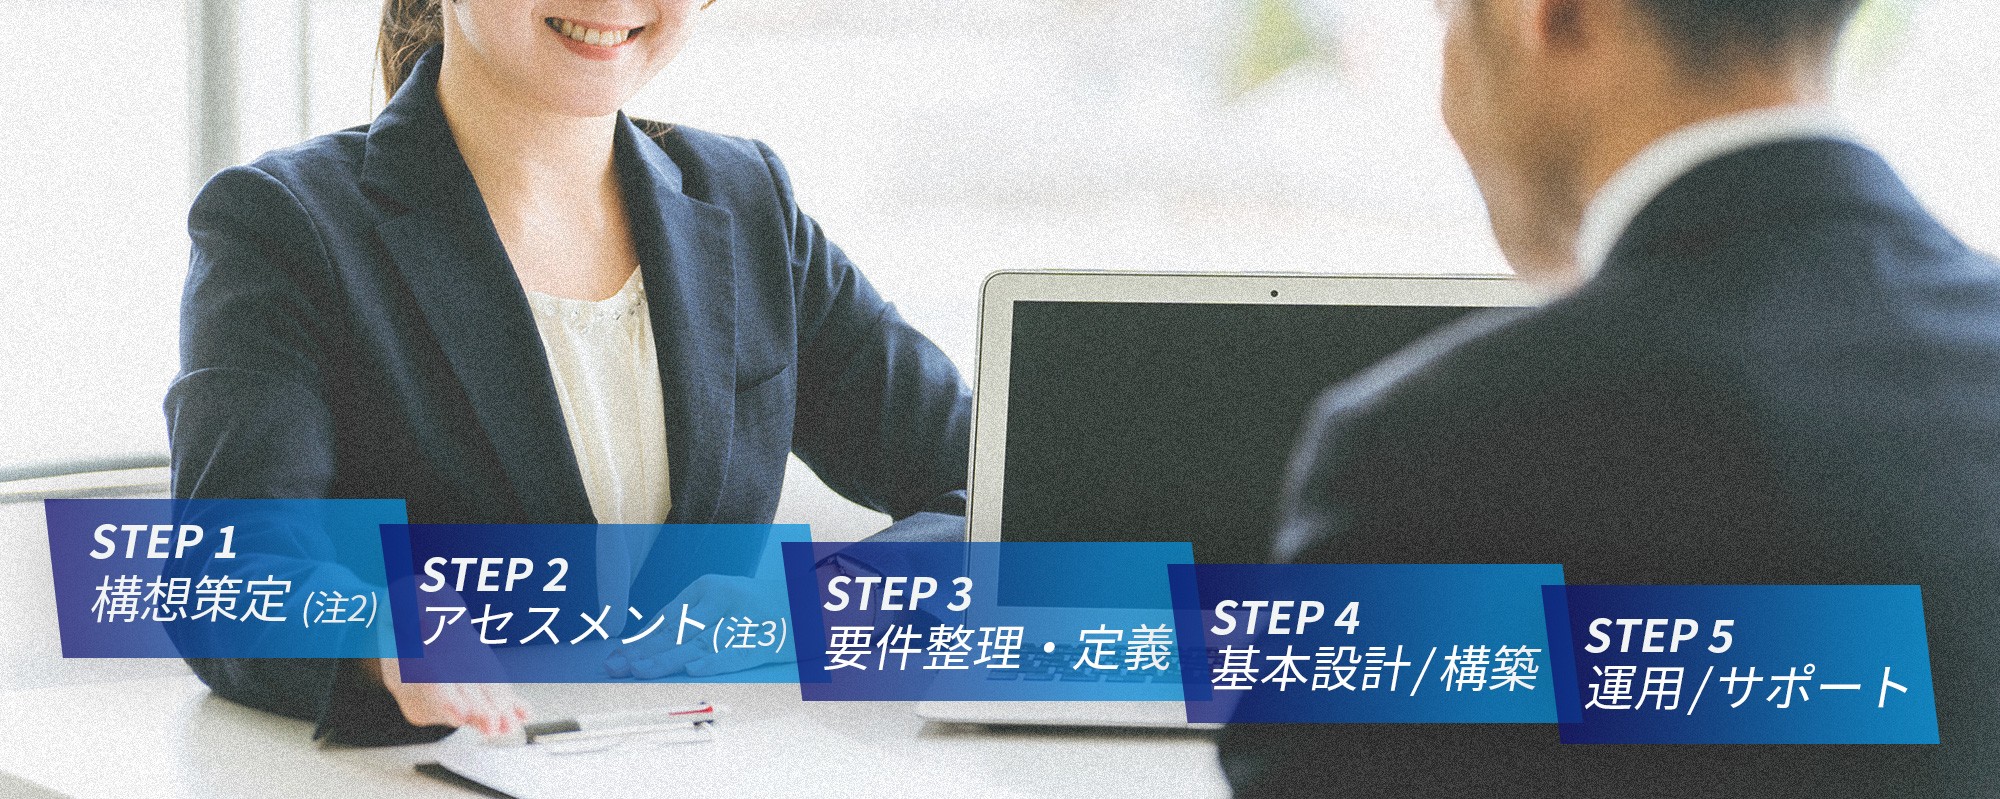 STEP 1 構想策定(注2)、STEP 2 アセスメント(注3)、STEP 3 要件整理・定義、STEP 4 基本設計/構築、STEP 5 運用/サポート